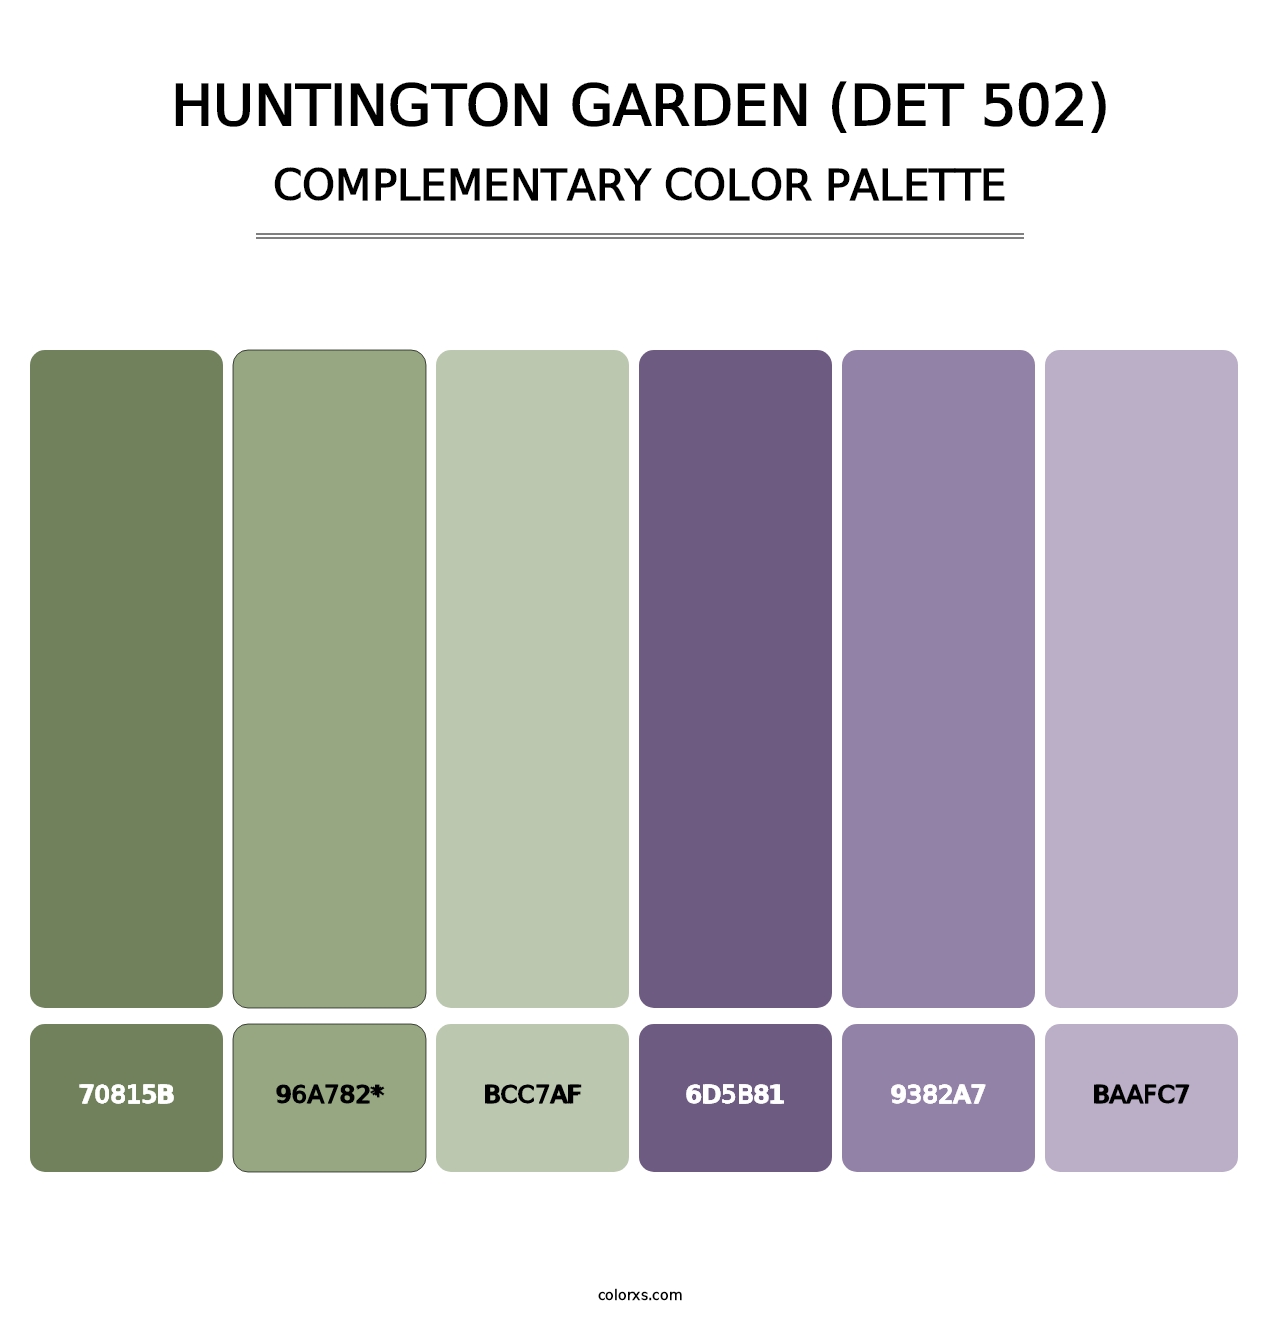 Huntington Garden (DET 502) - Complementary Color Palette